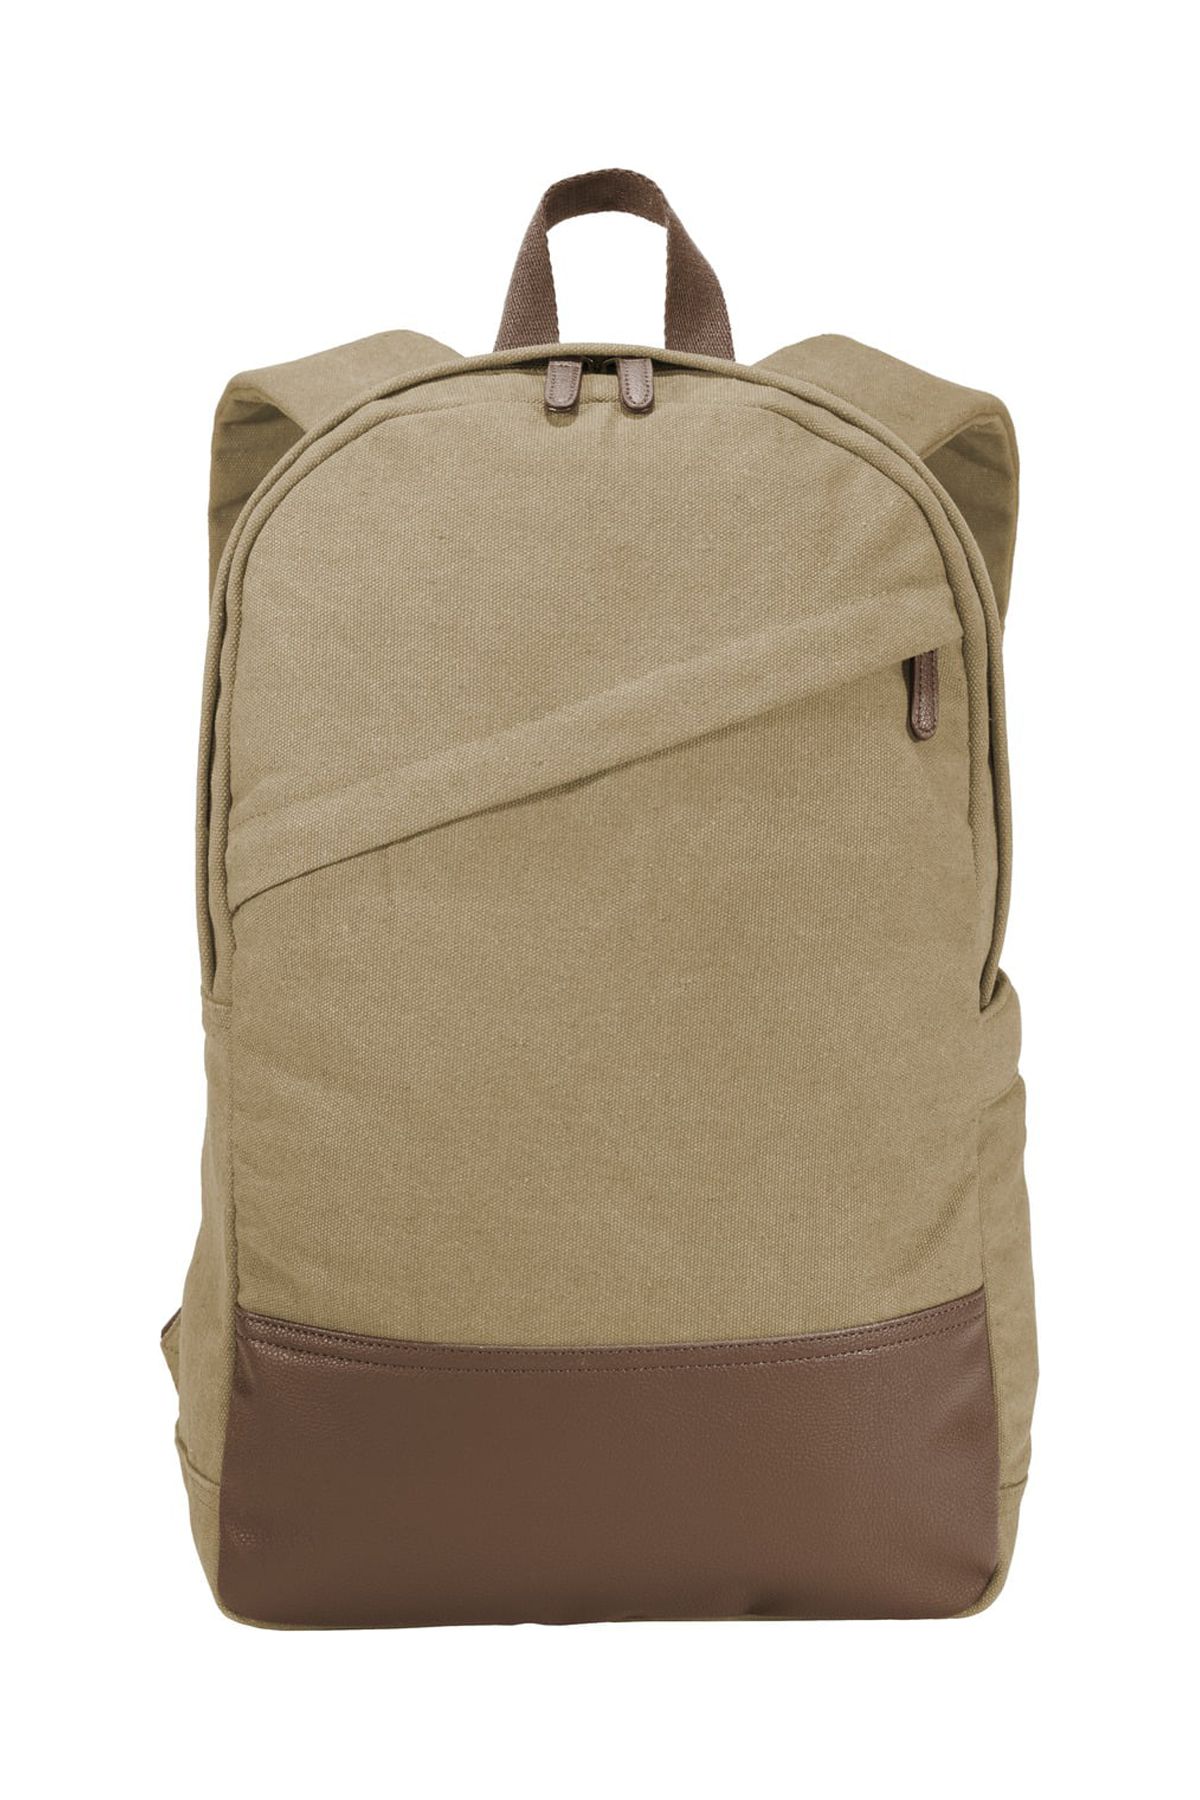 Port Authority Adult Unisex canvas Backpack Desert Khaki One Size Fits All - image 2 of 3